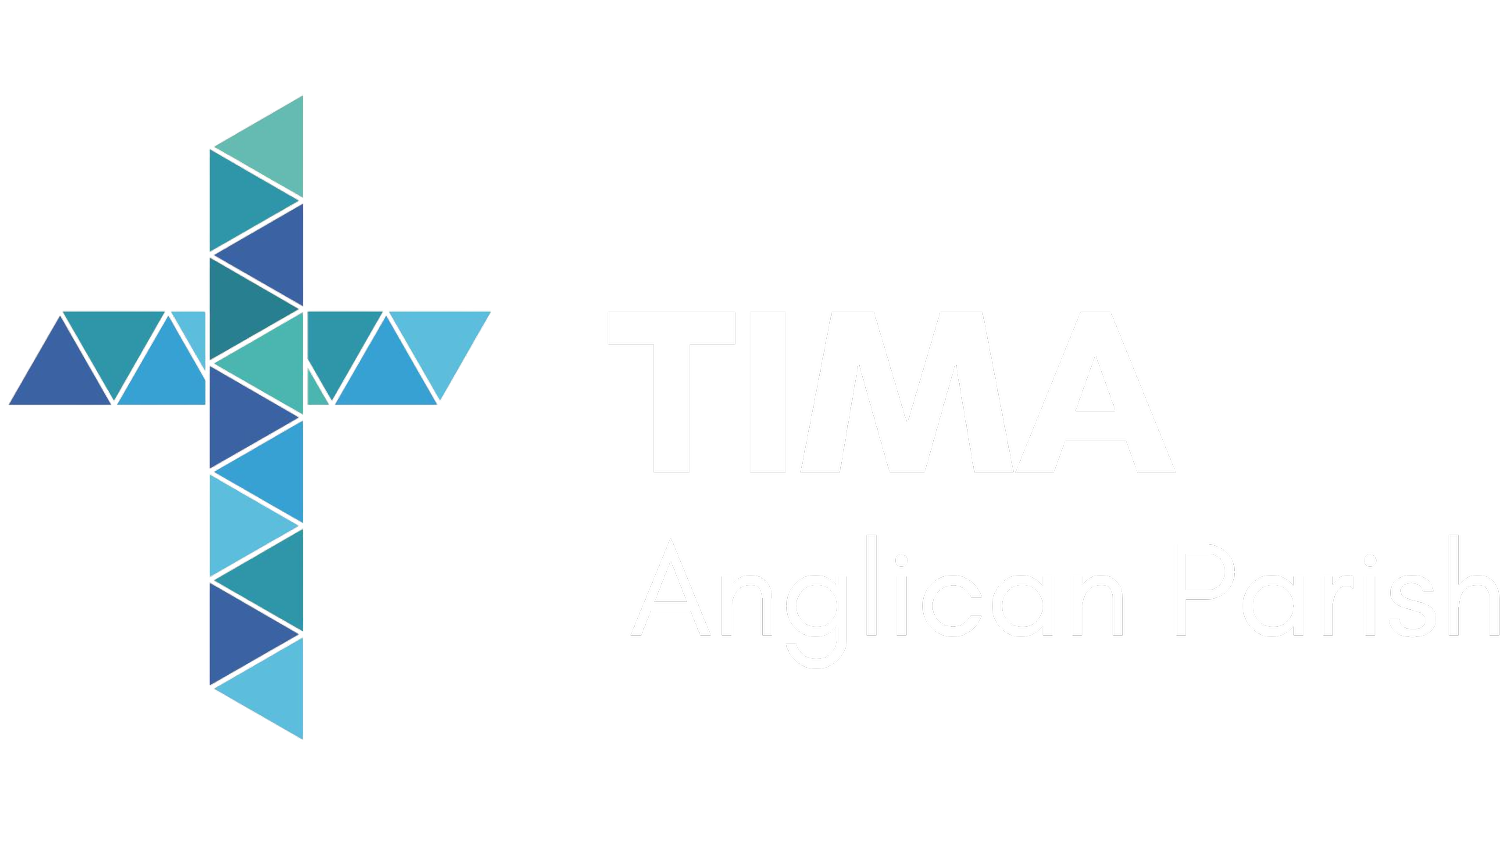 TIMA Anglican Parish